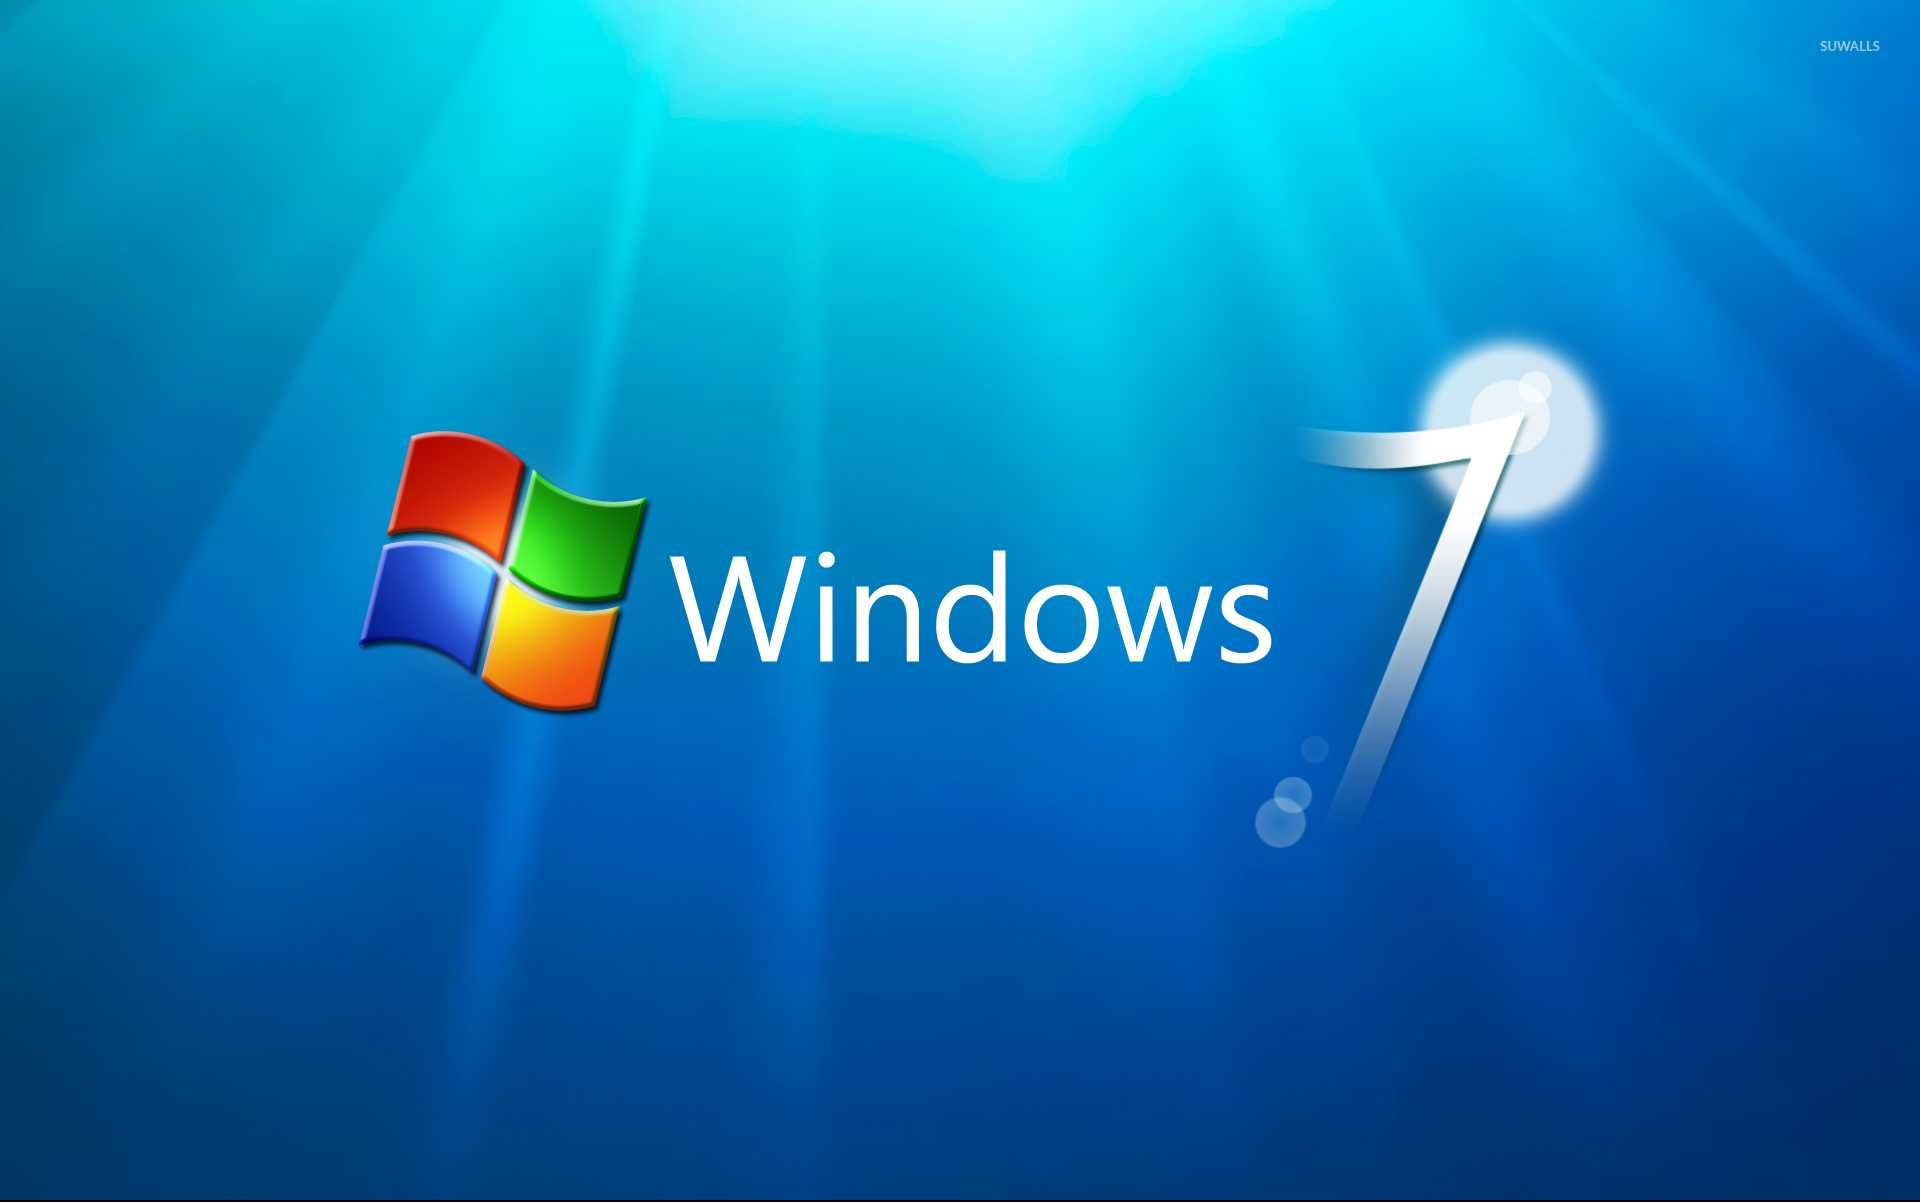 Windows семерка. Виндовс. Windows 7. Windows 7 фото. Обои Windows 7.